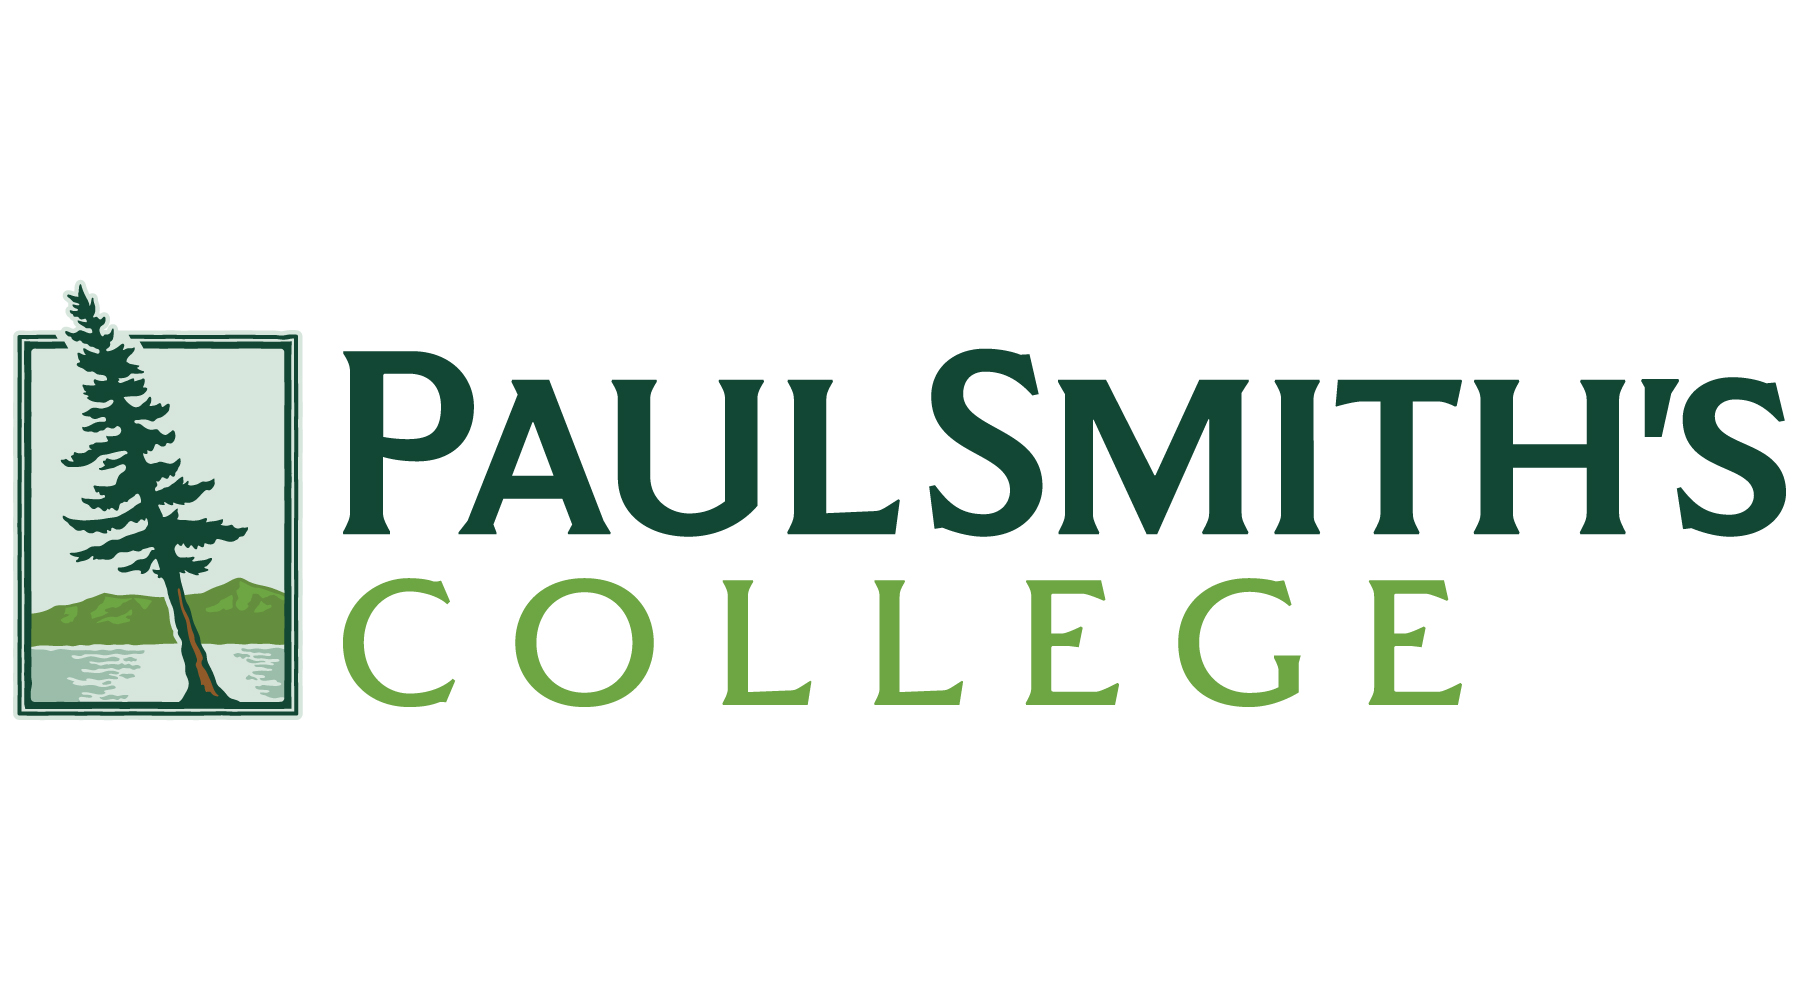 Paul smith college logo